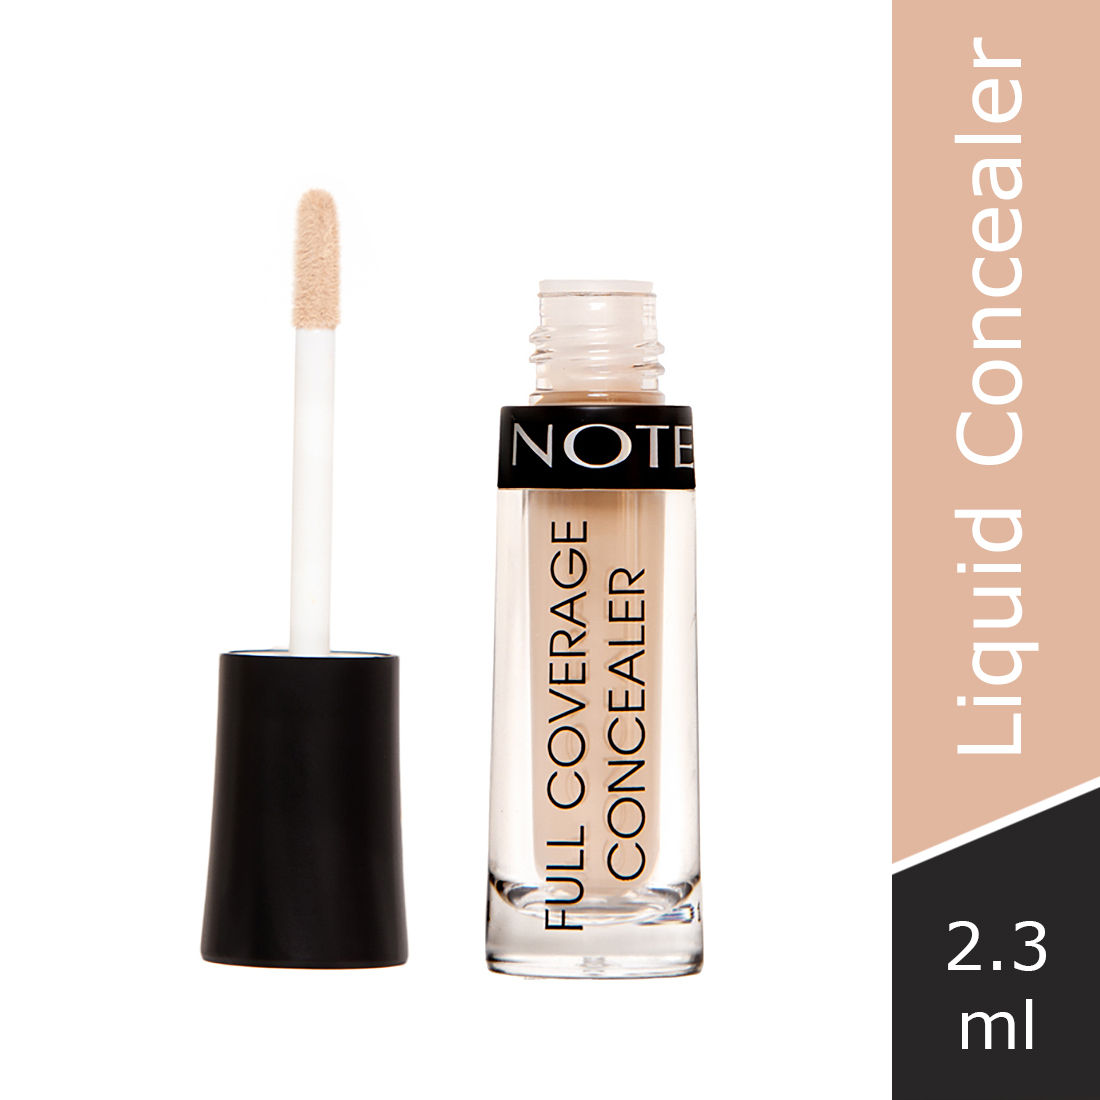 Note Full Coverage Liquid Concealer - 01 Ivory